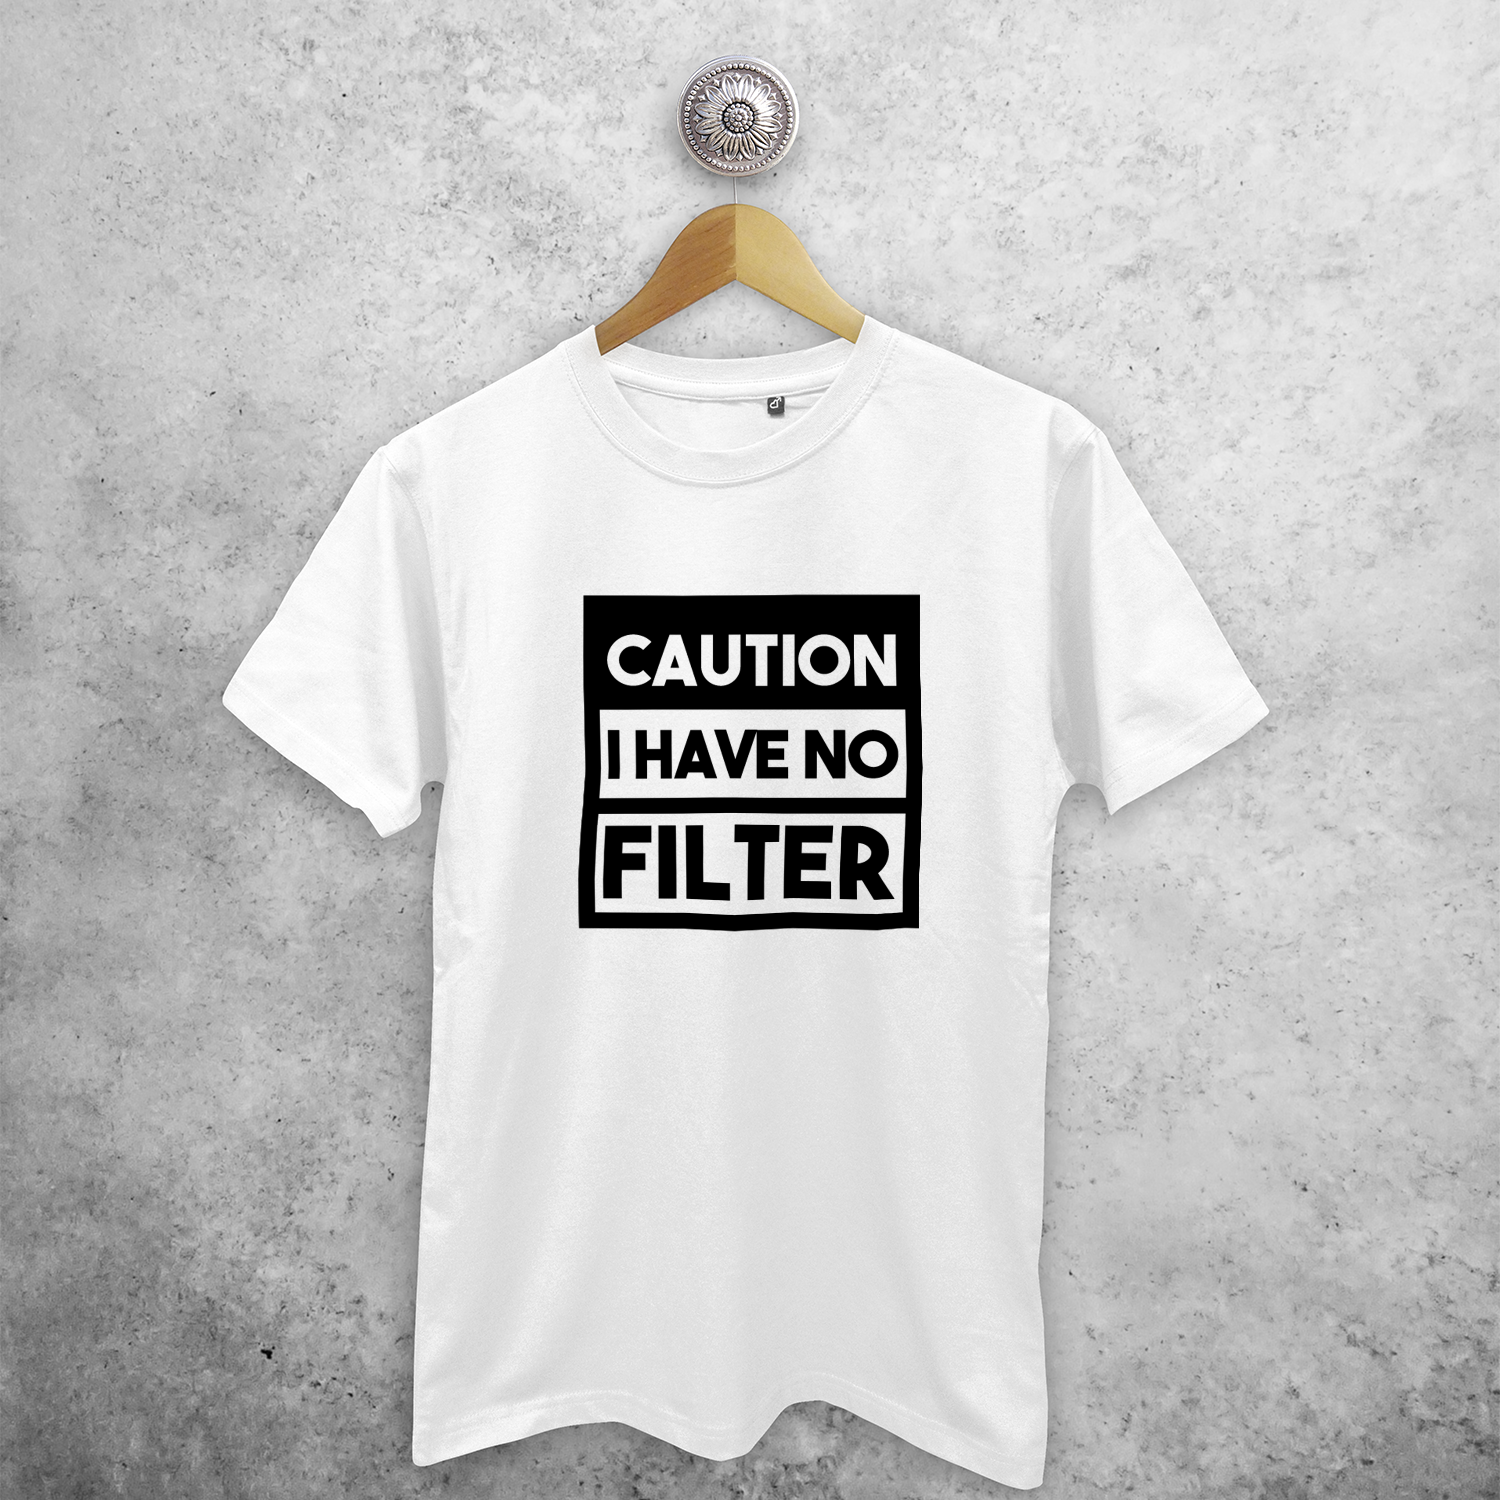 'Caution: I have no filter' adult shirt